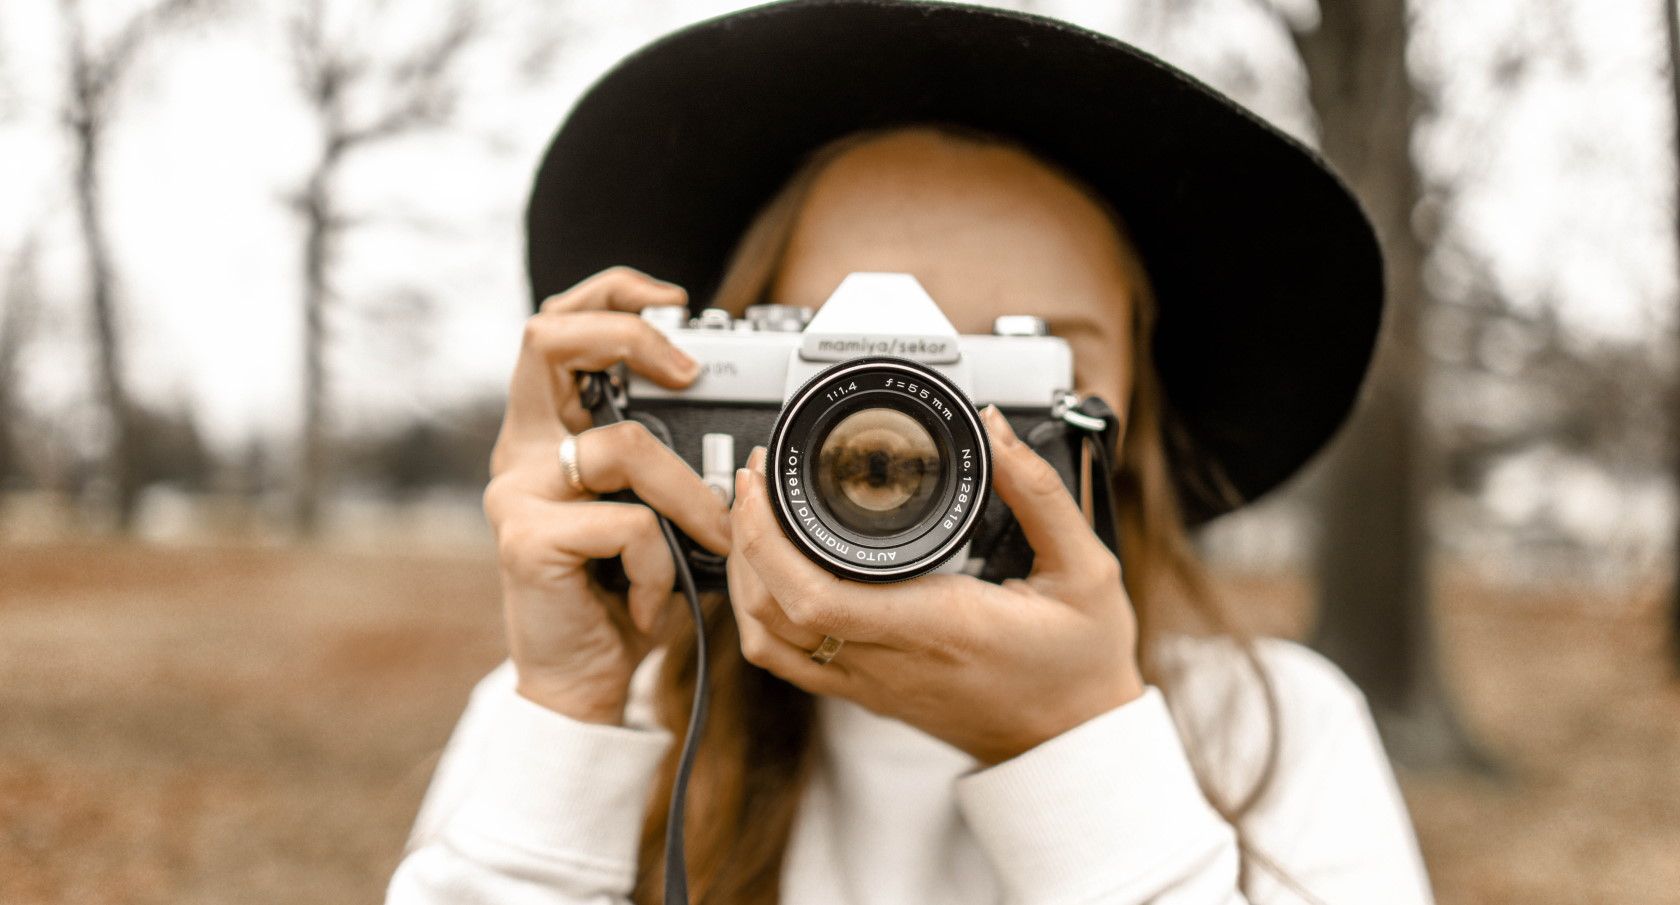 Woman wearing hat taking photograph using vintage camera